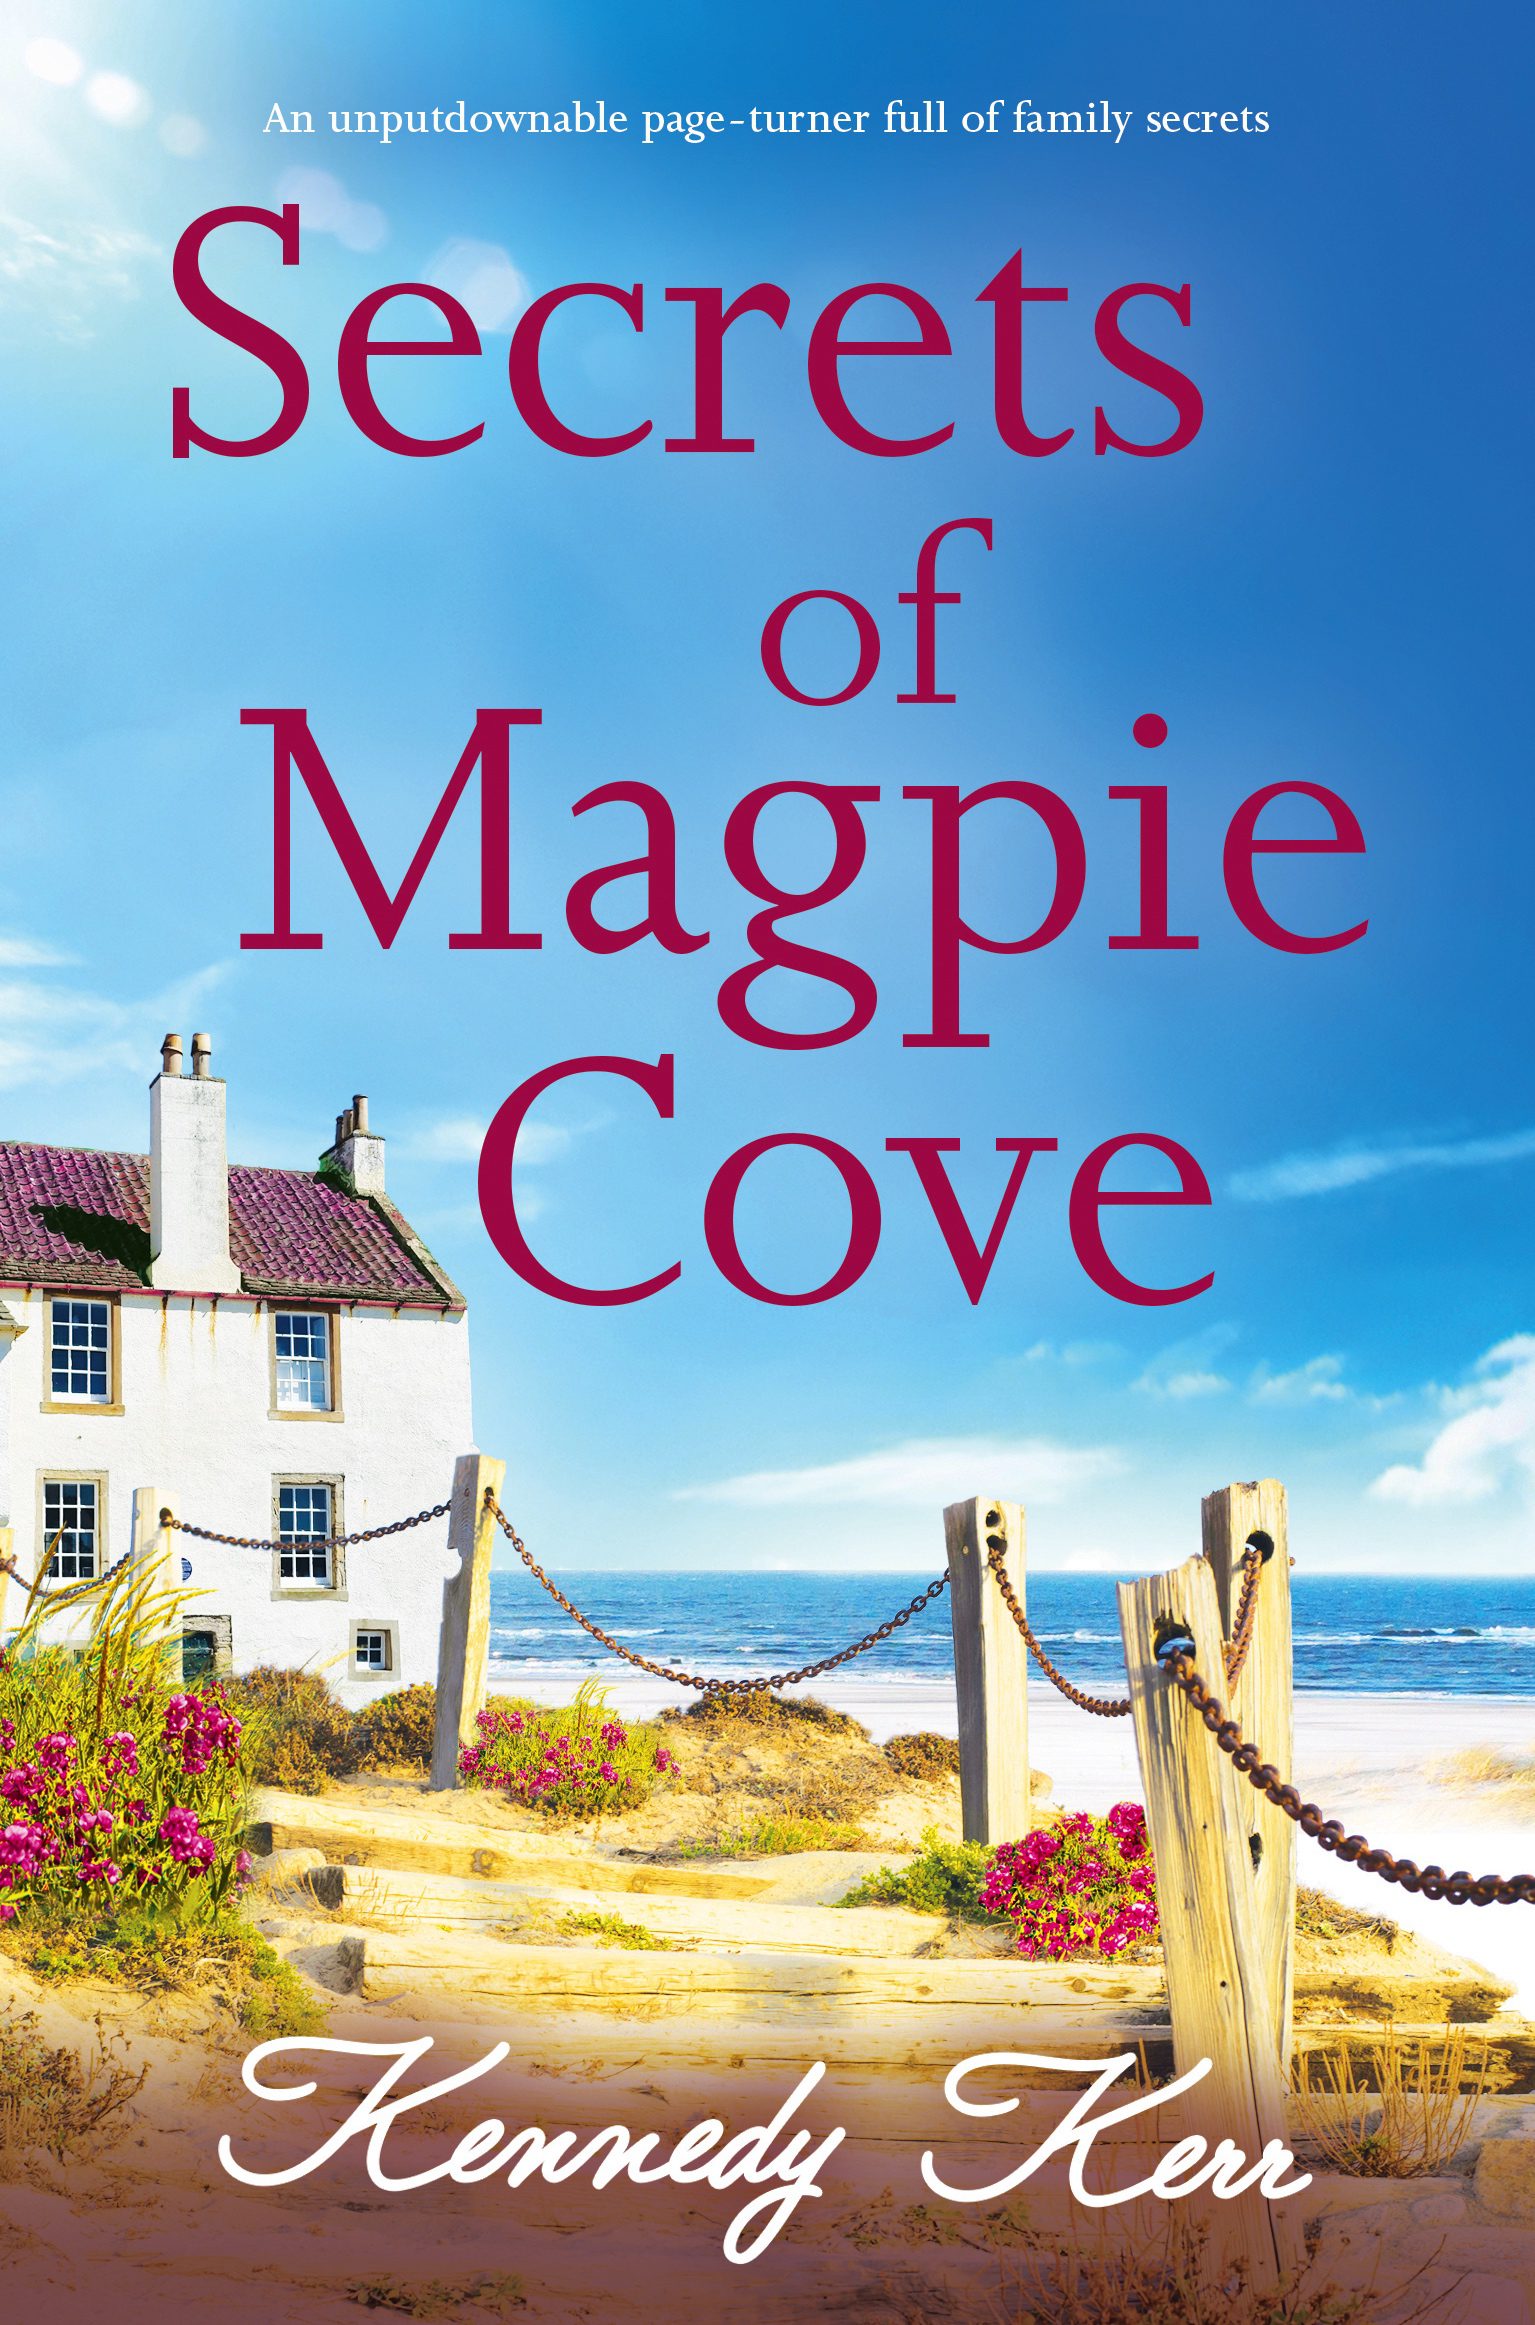 Secrets of Magpie Cove book cover